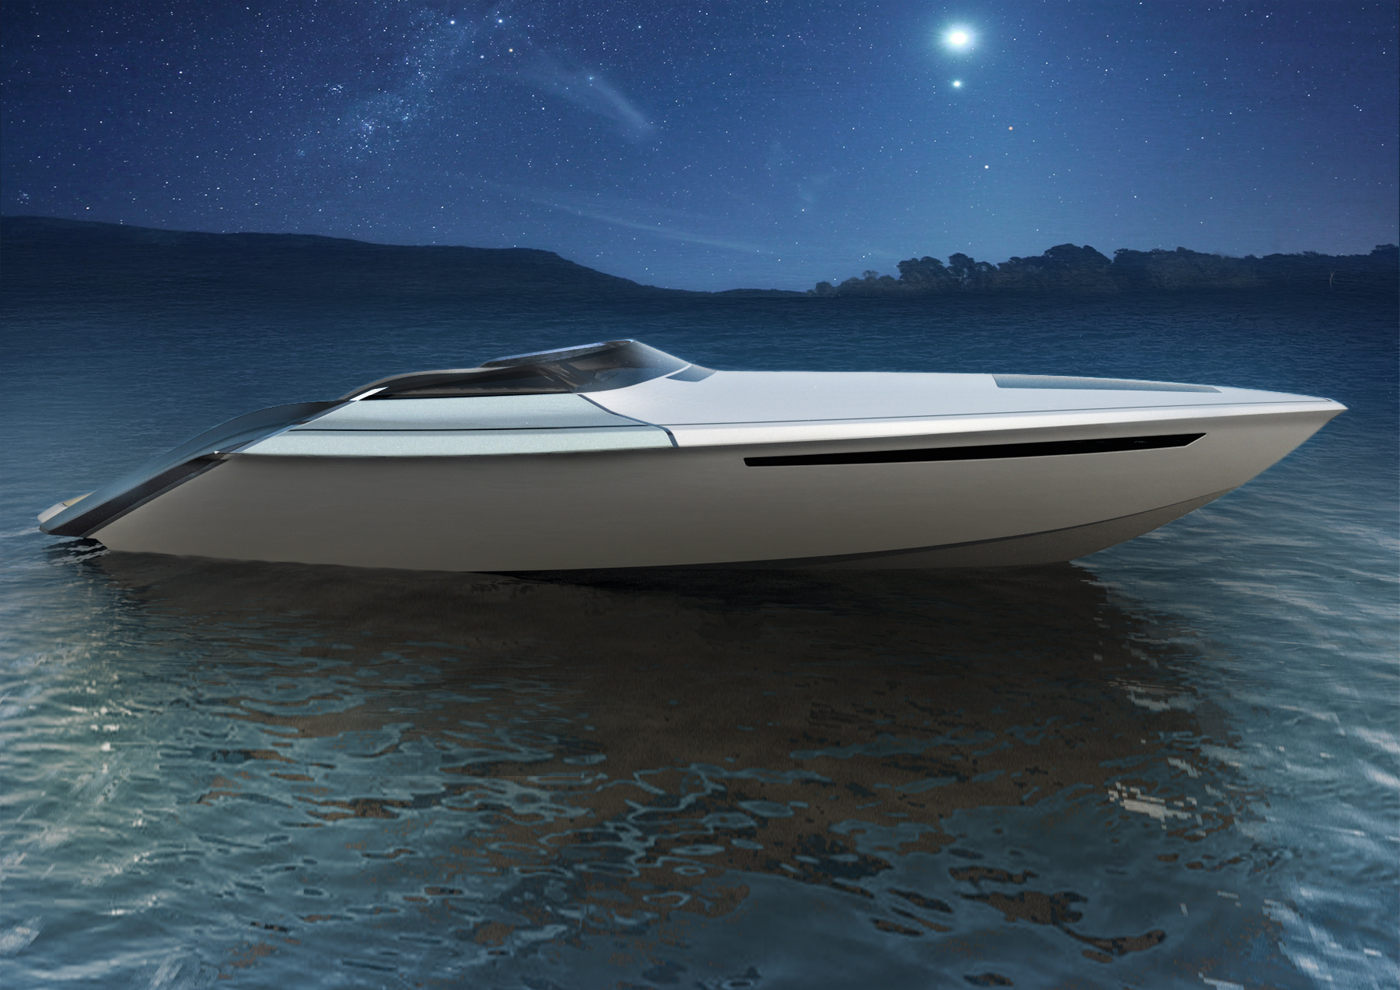 Yacht design - 40 Feet - Power boat - Final exterior1e - Davide Mezzasalma - Furniture design - Berlin